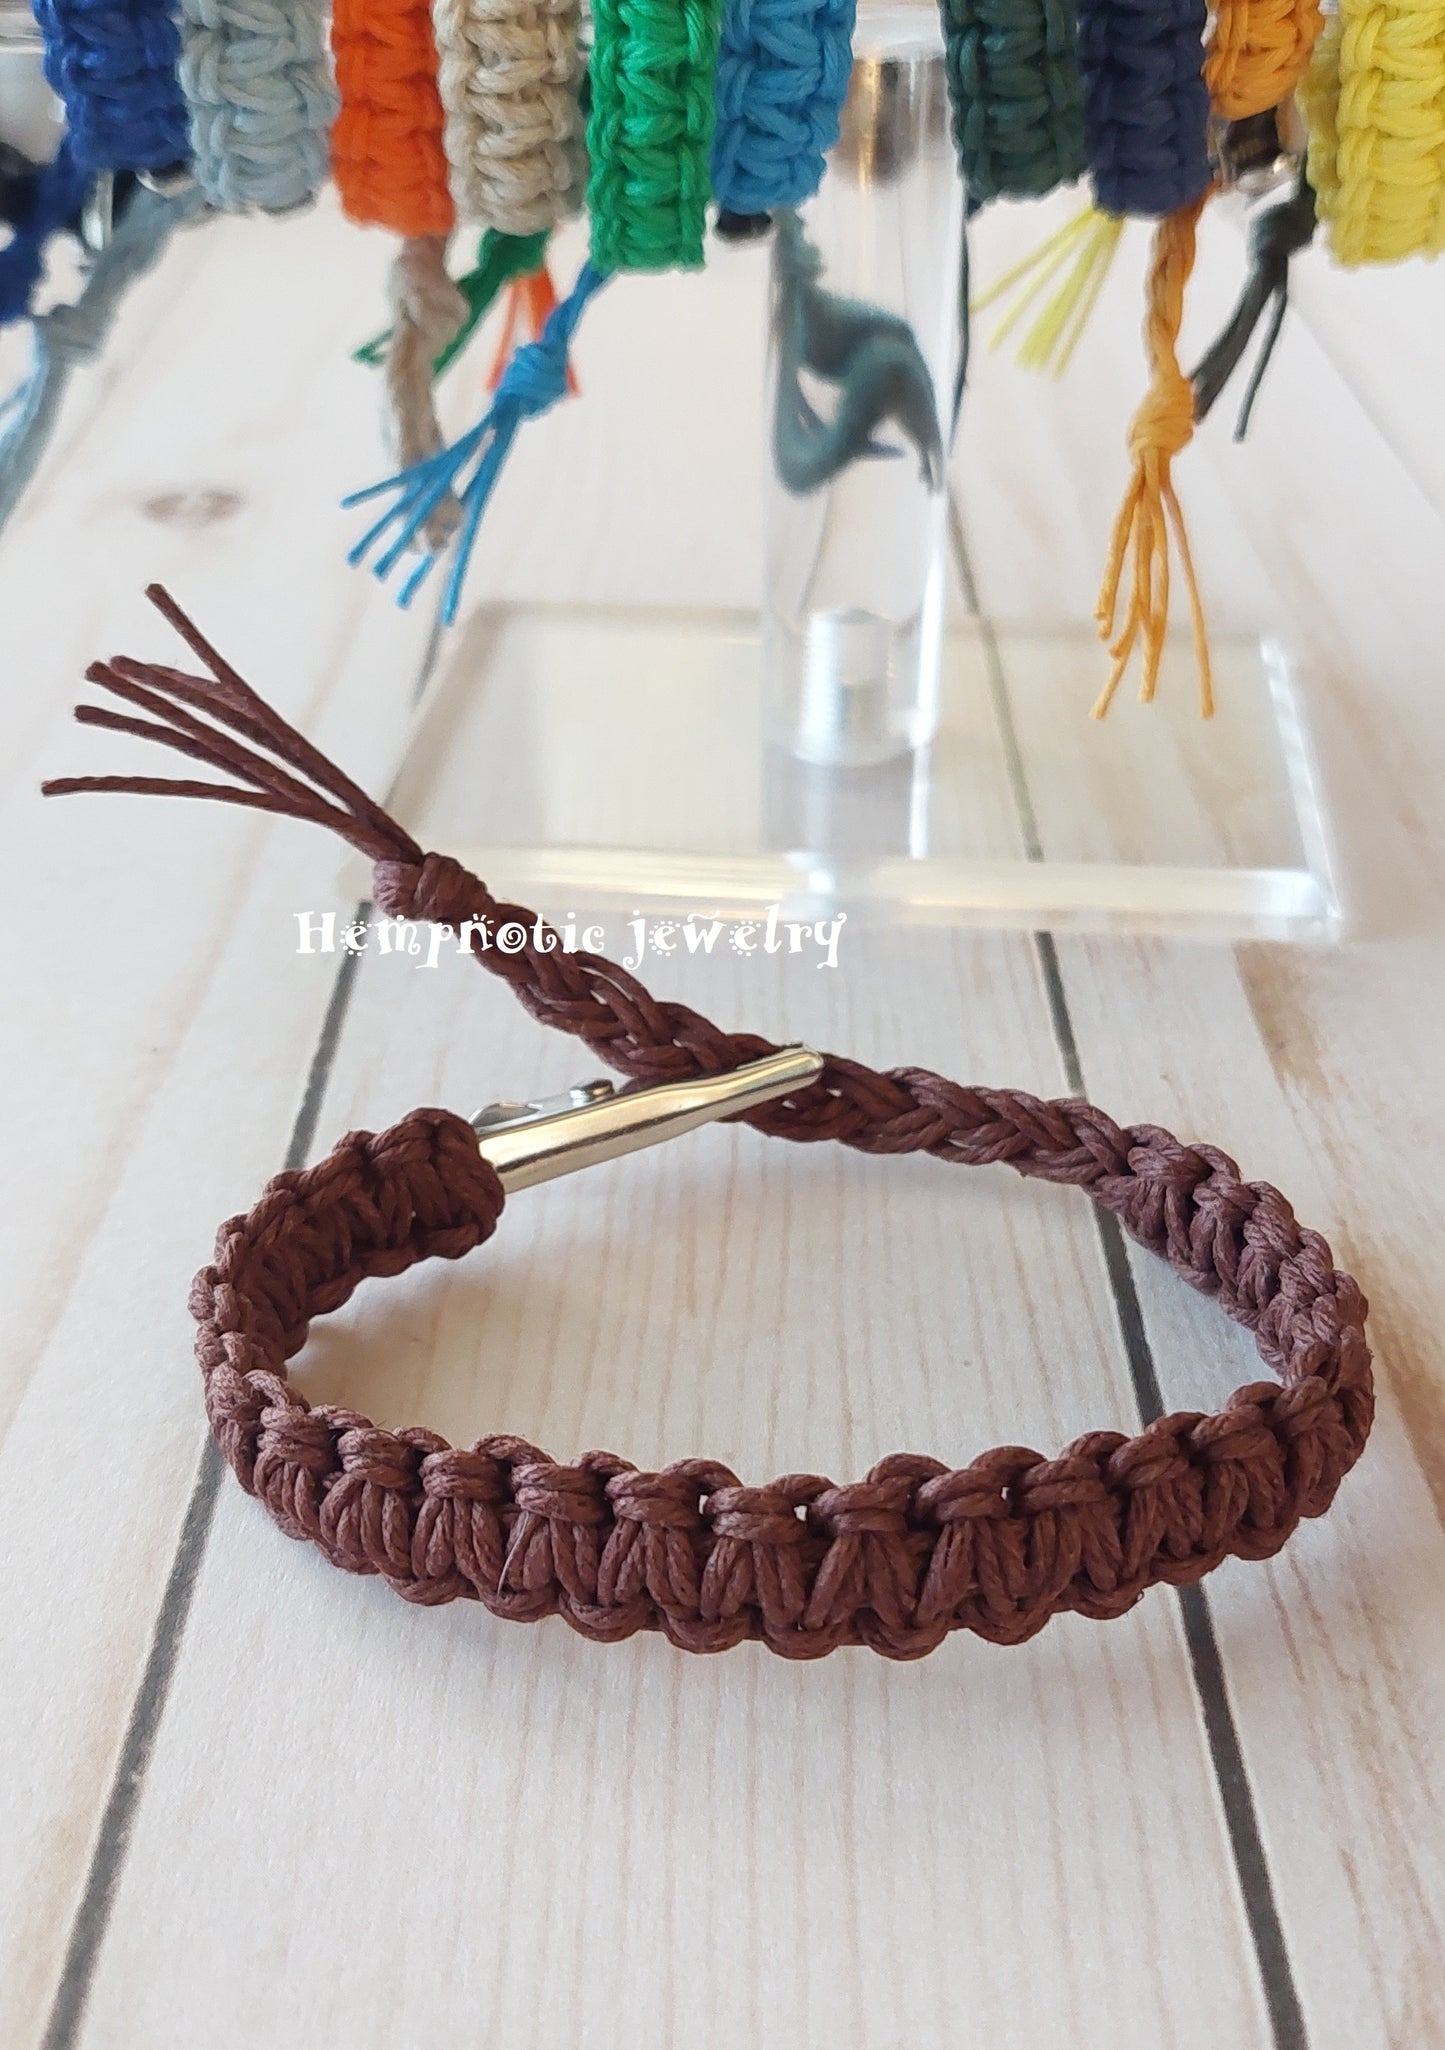 roach clip brown hemp bracelet with alligator clip clasp